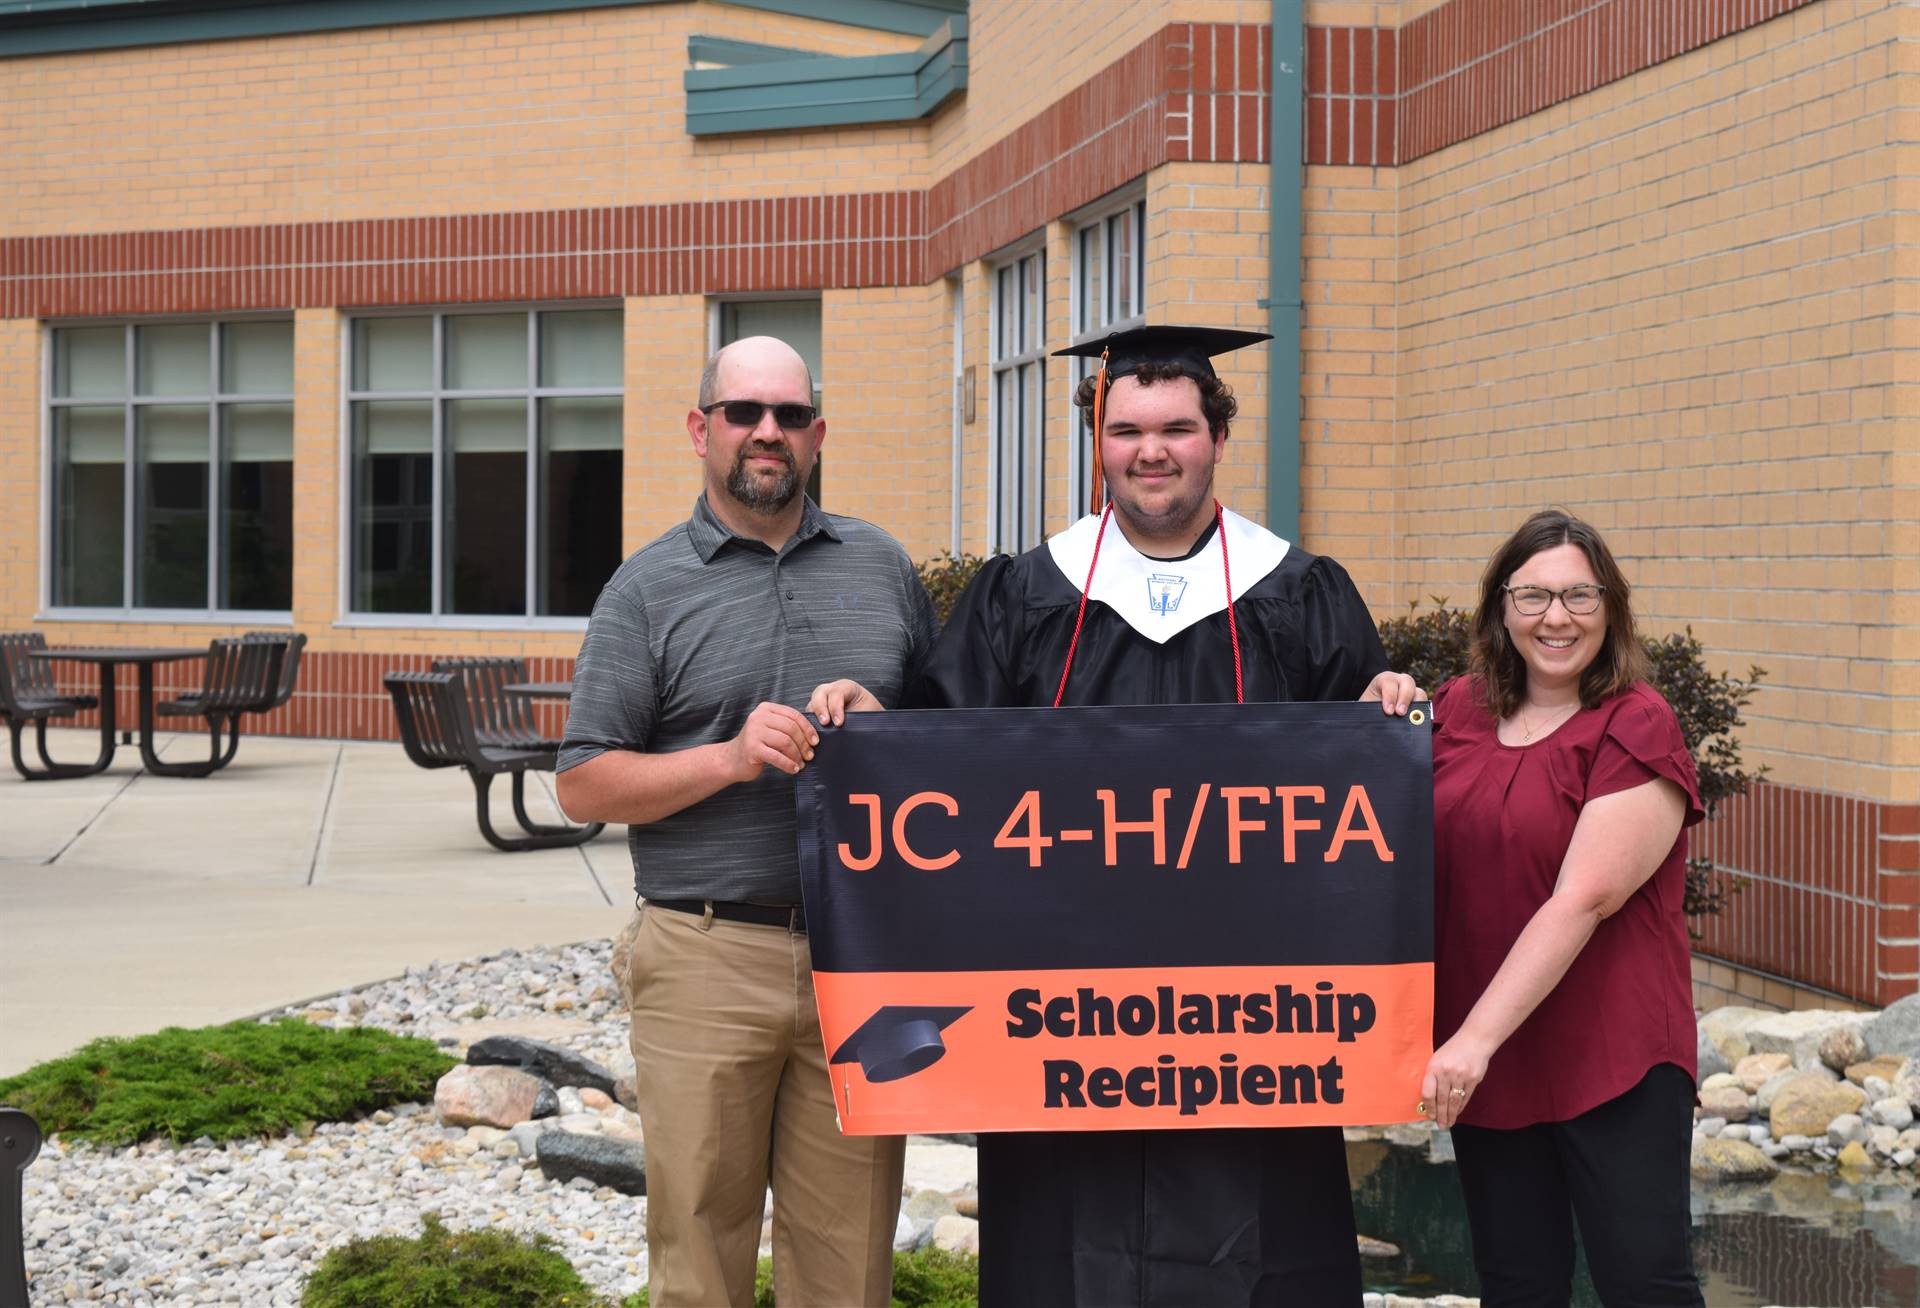 Jacob Borchers JC 4-H/FFA Scholarship